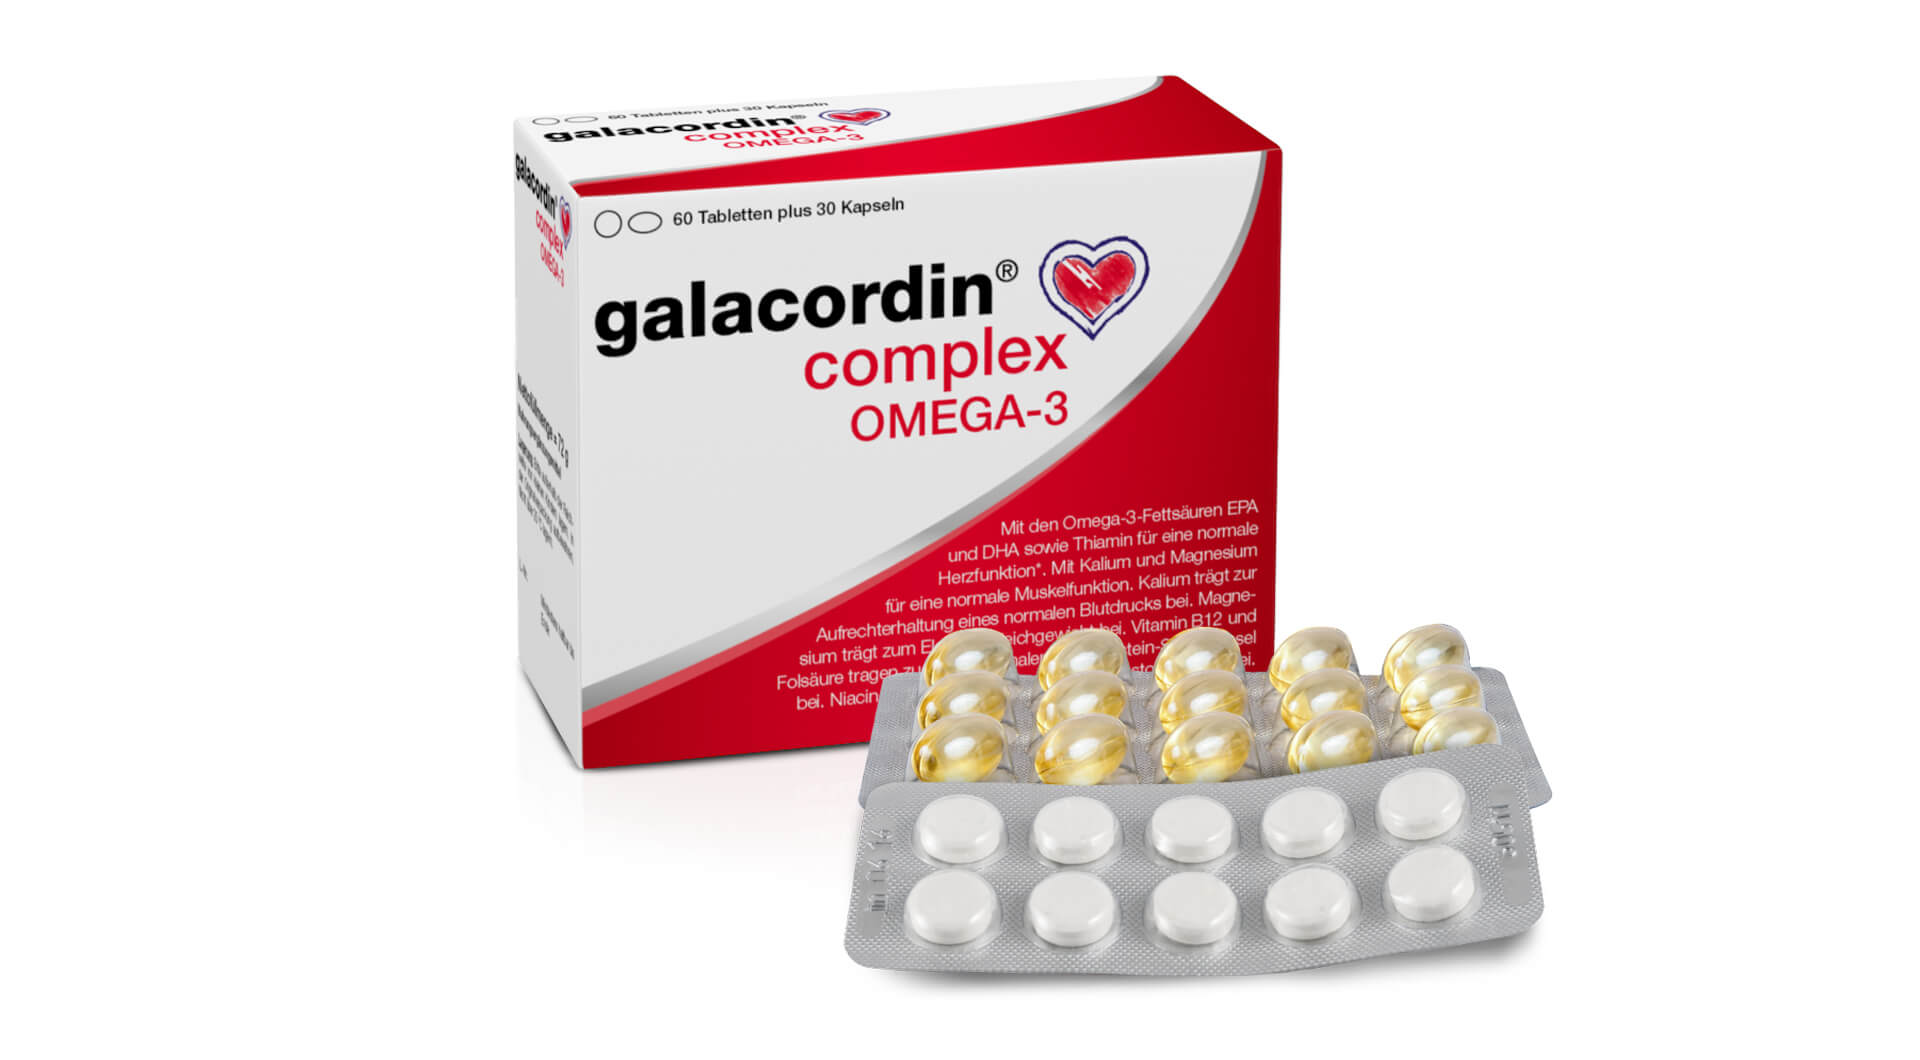 galacordin complex OMEGA-3